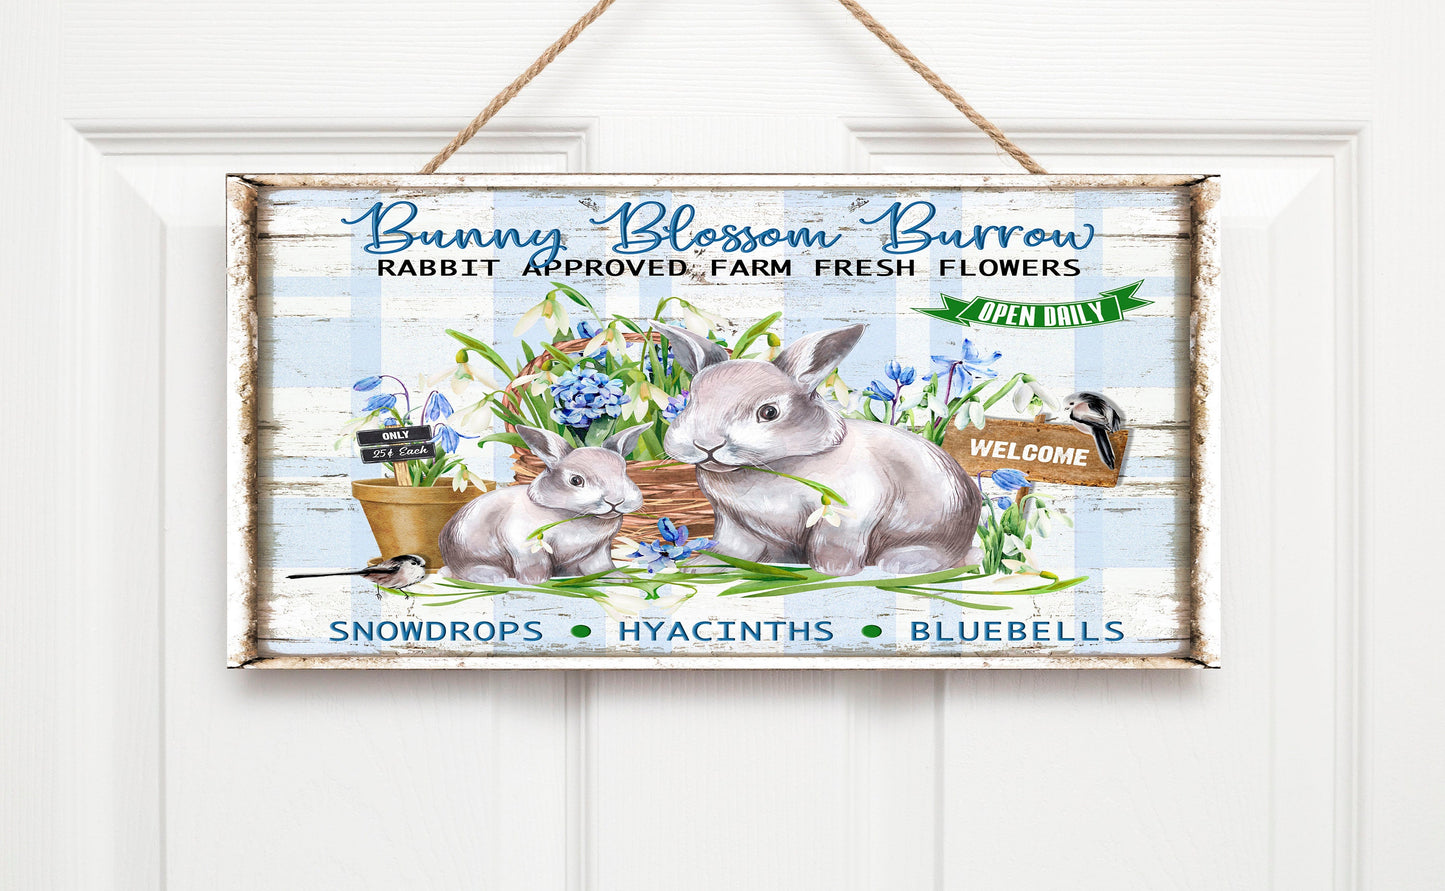 The Bunny Blossom Burrow Printed Handmade Wood Sign